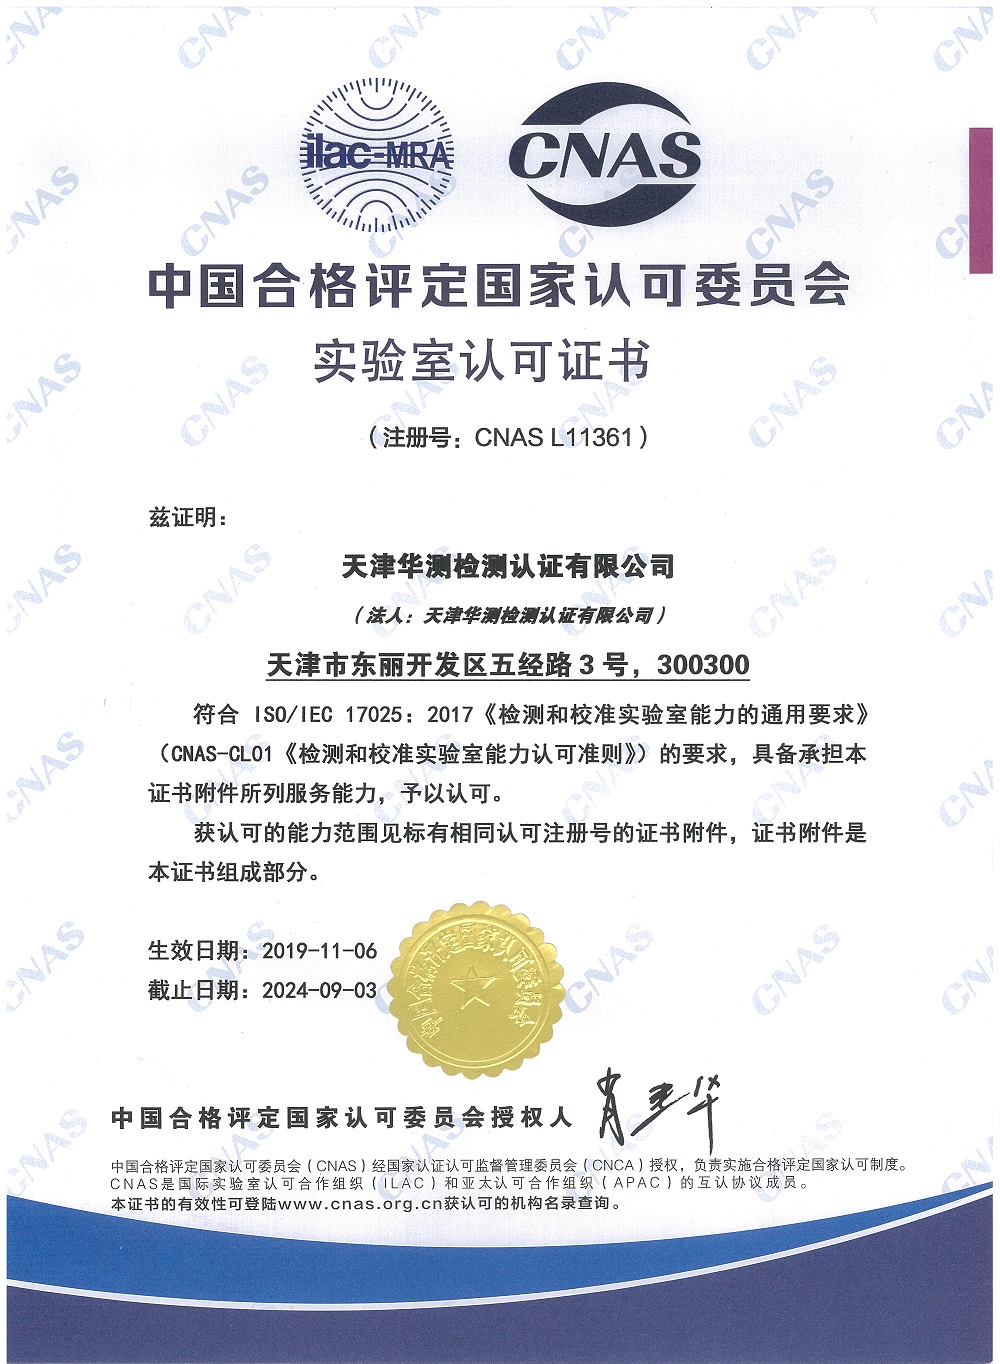 Tianjin CNAS Certificate